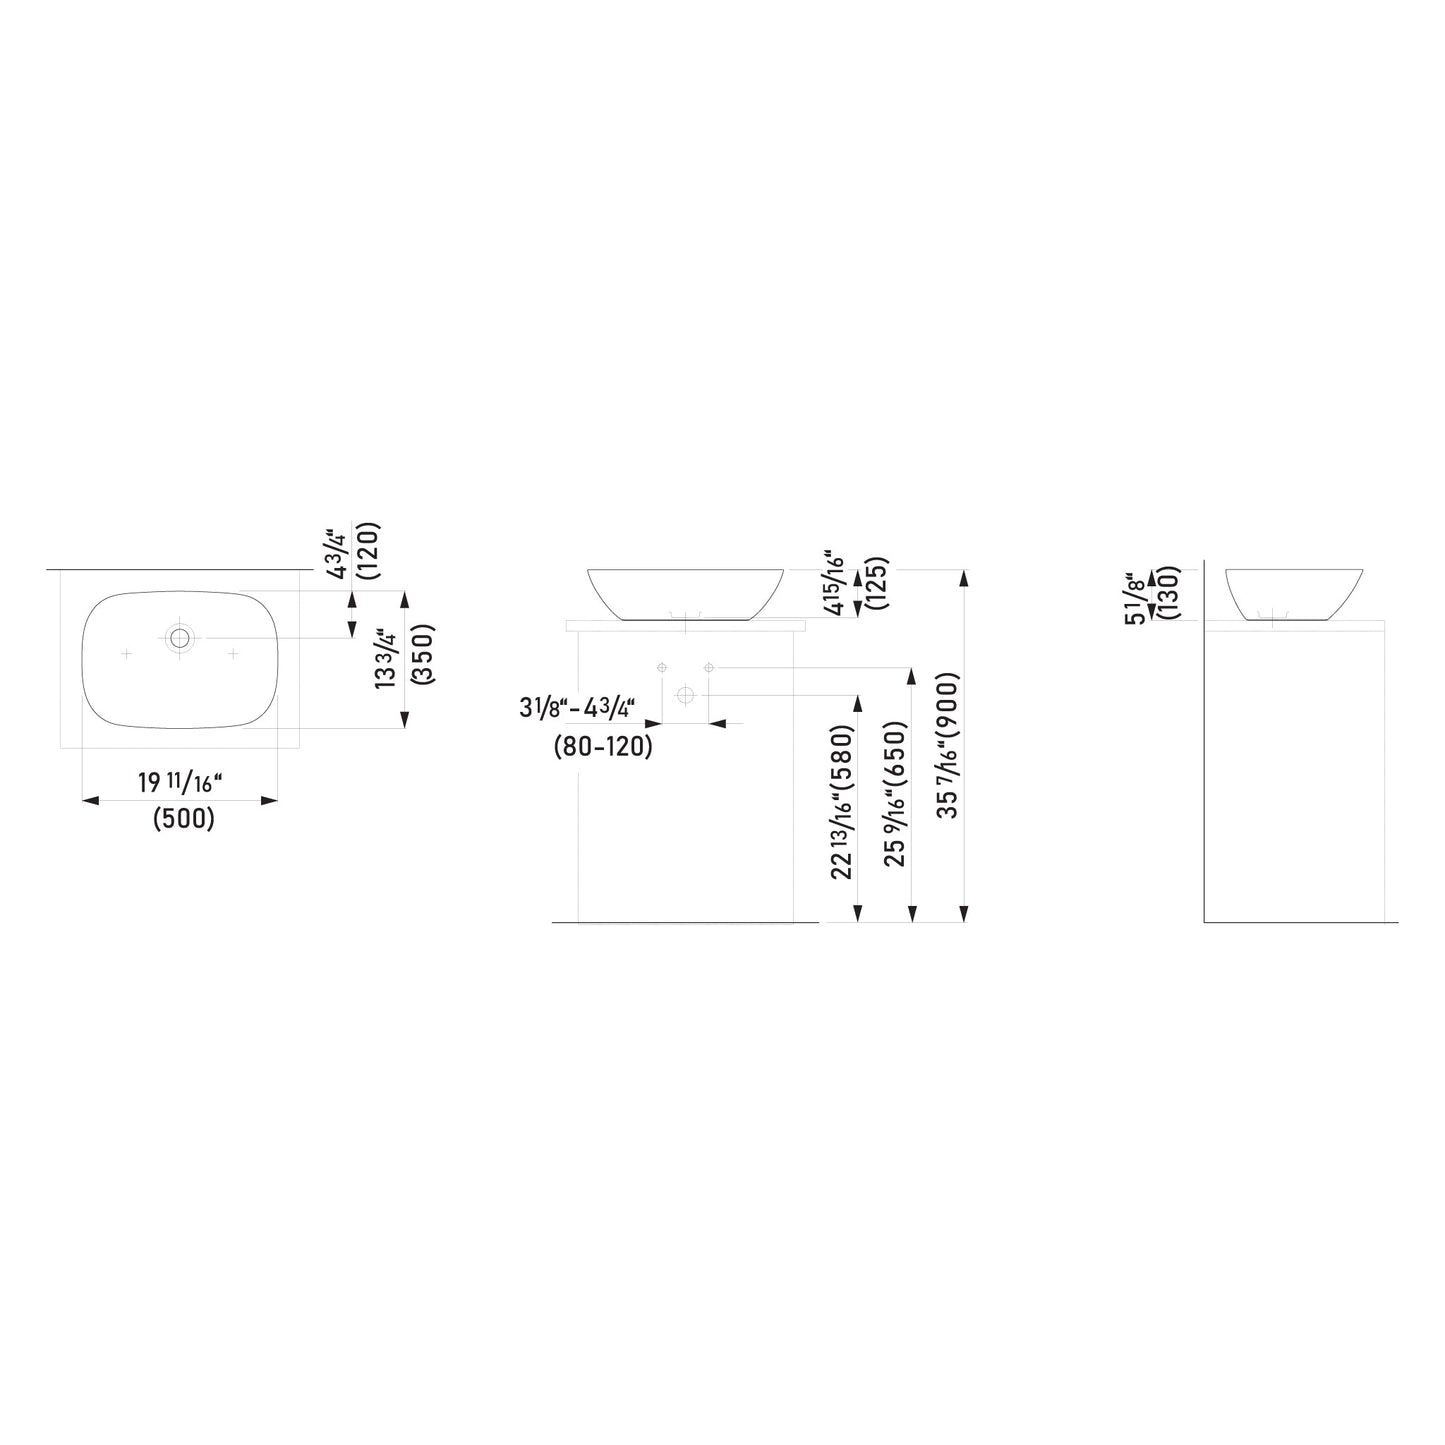 Laufen Ino 20" x 14" Rectangular White Ceramic Vessel Bathroom Sink Without Overflow Slot